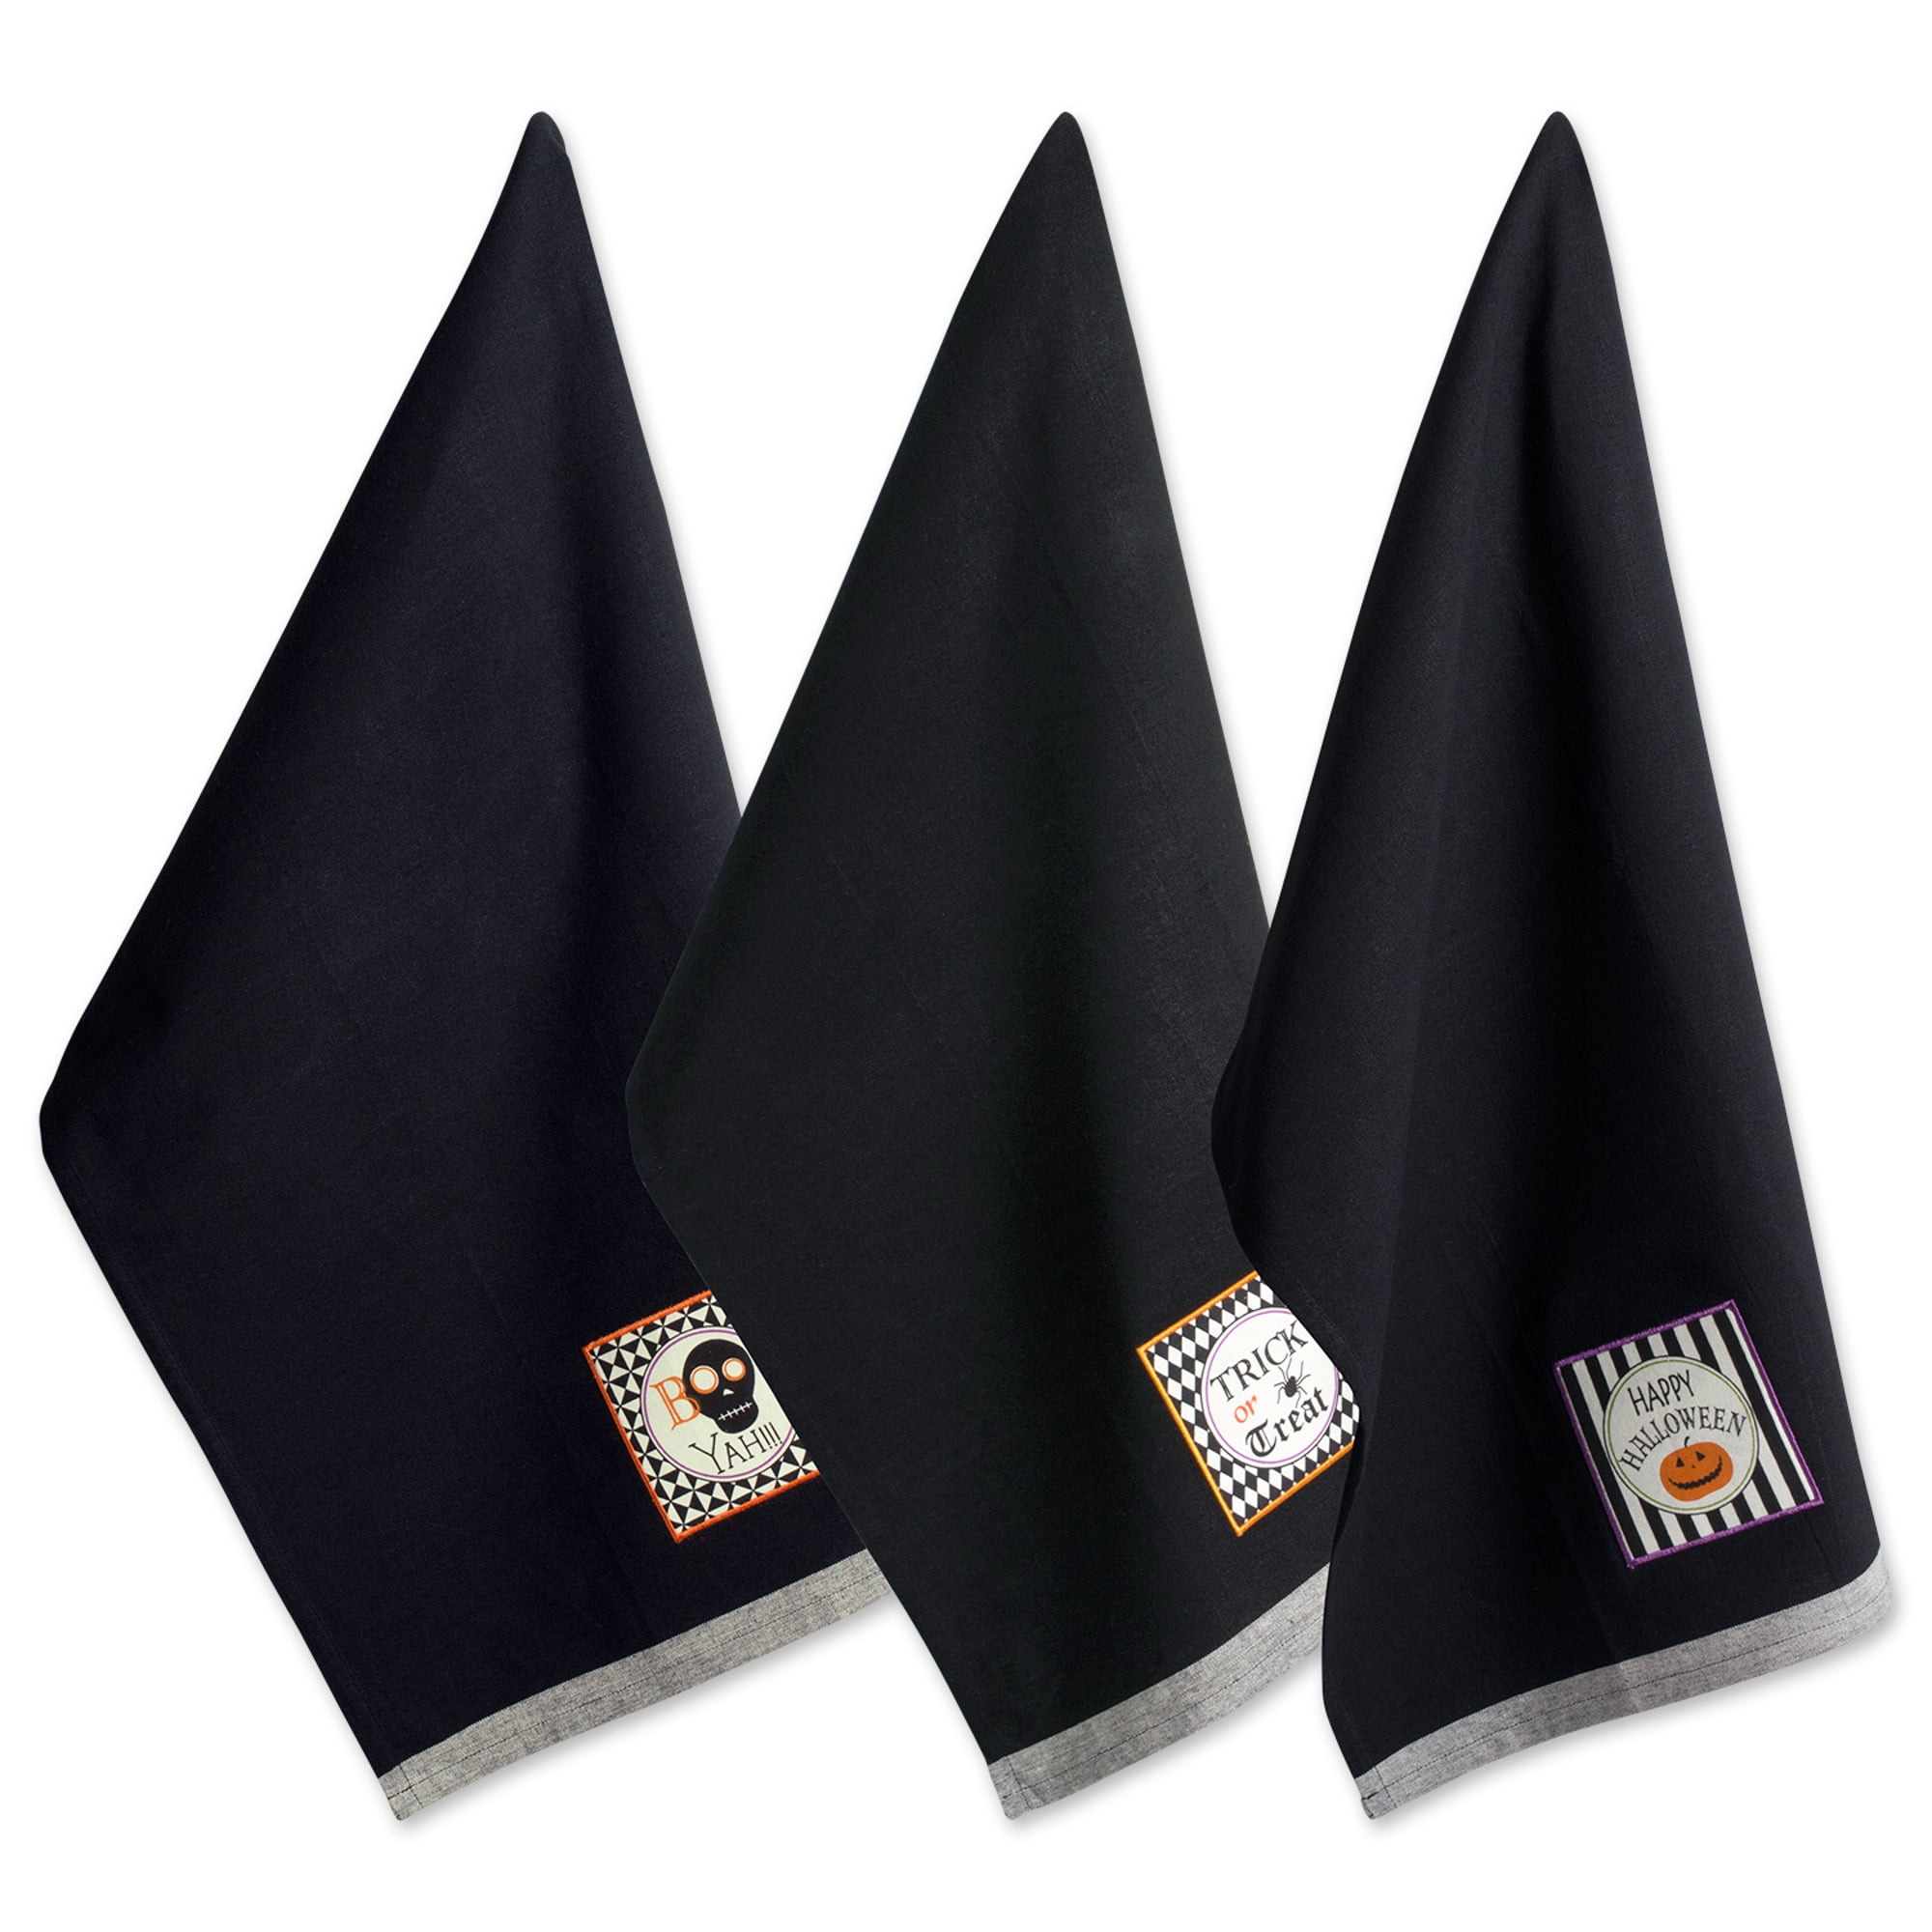 Design Imports Camz37636 Black All Hallows Eve Halloweeen Embellished Dish Towel Set - Set Of 3